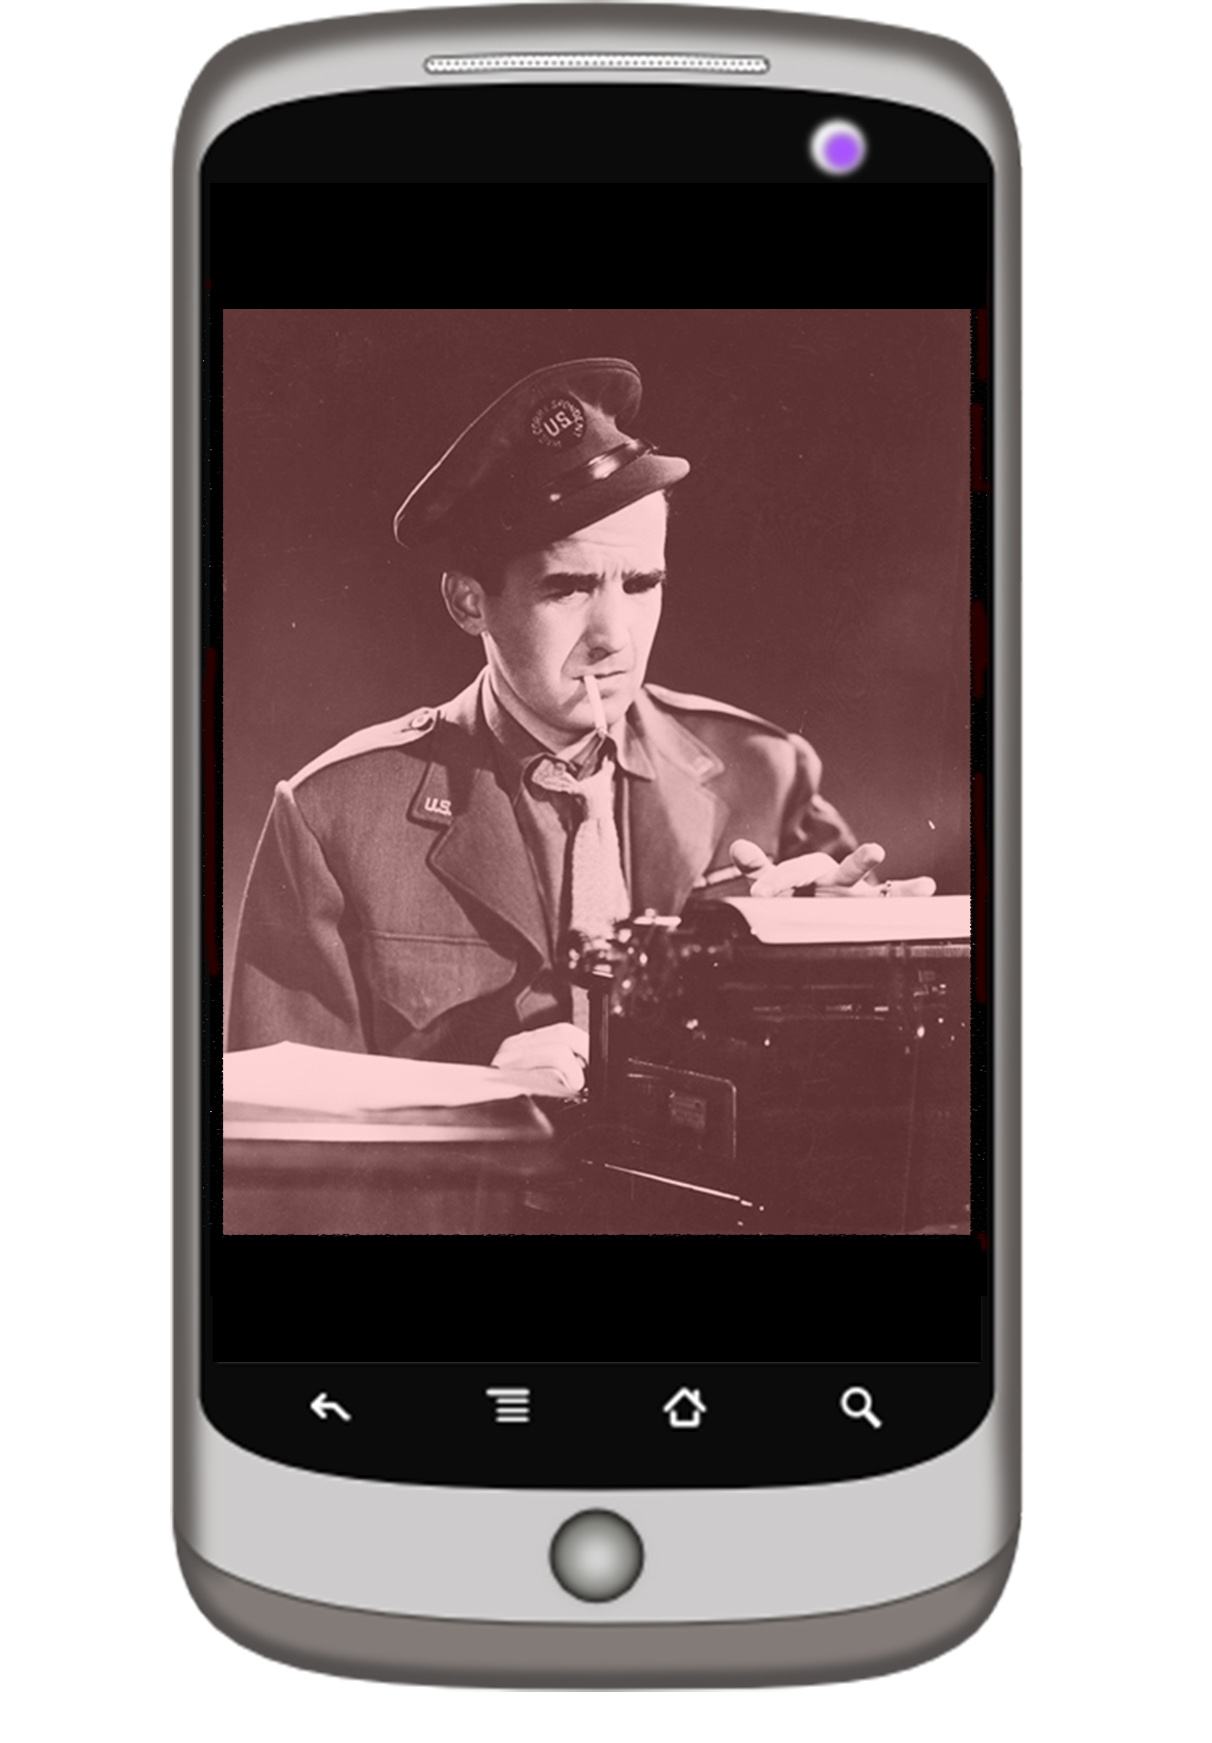 Edward Murrow photo on a cell phone